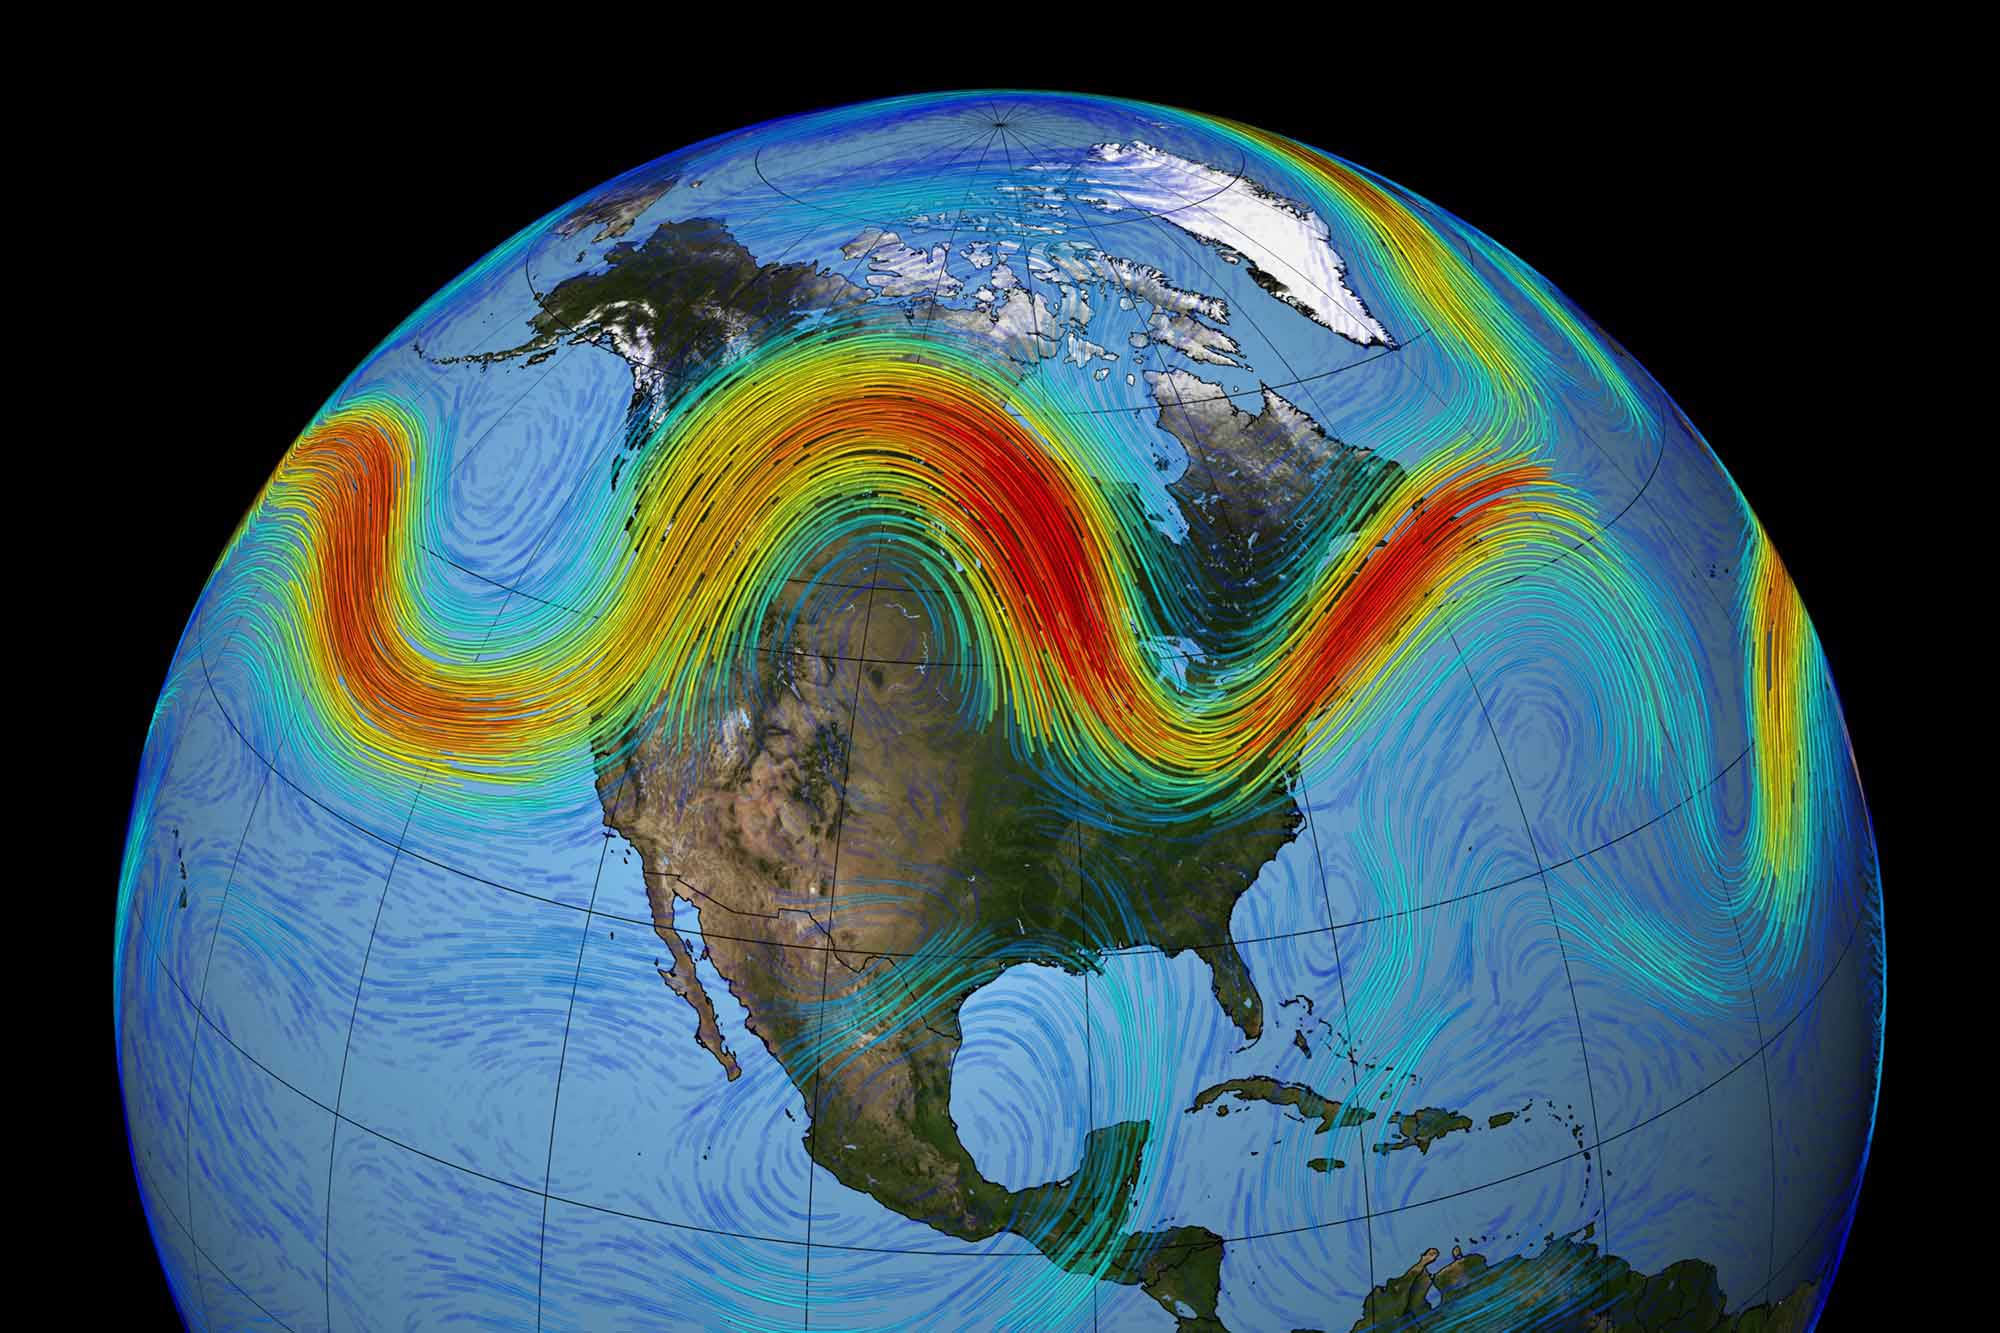 Colorful jet stream visualization over Earth's Western Hemisphere.